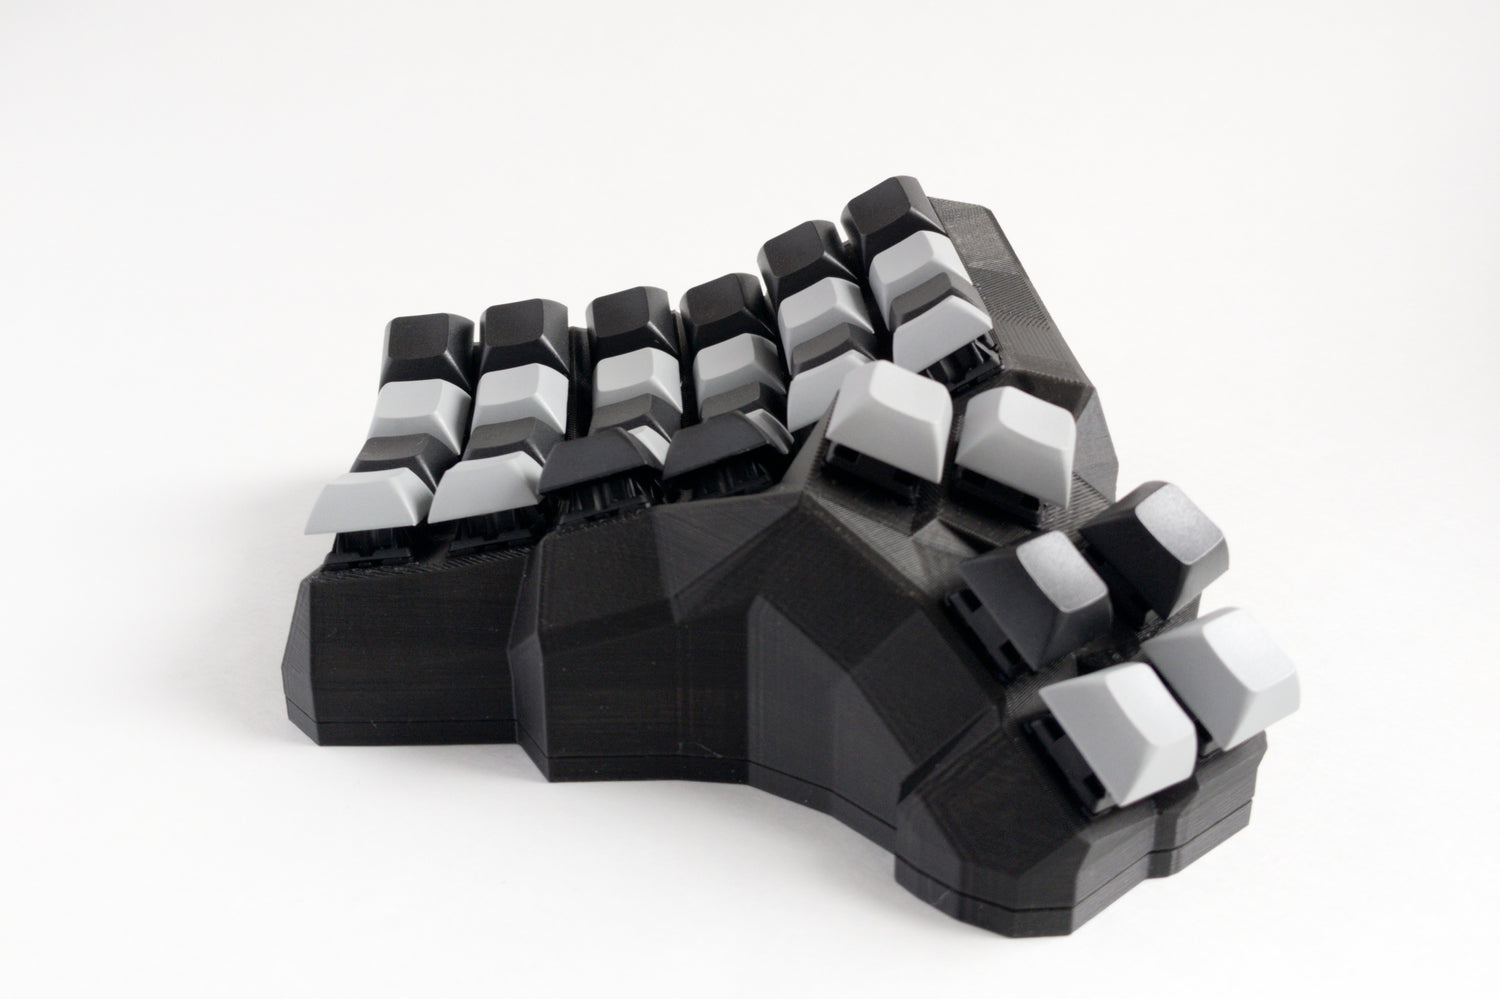 TaikoHub ergonomic split mechanical ortholinear dactyl manuform keyboard